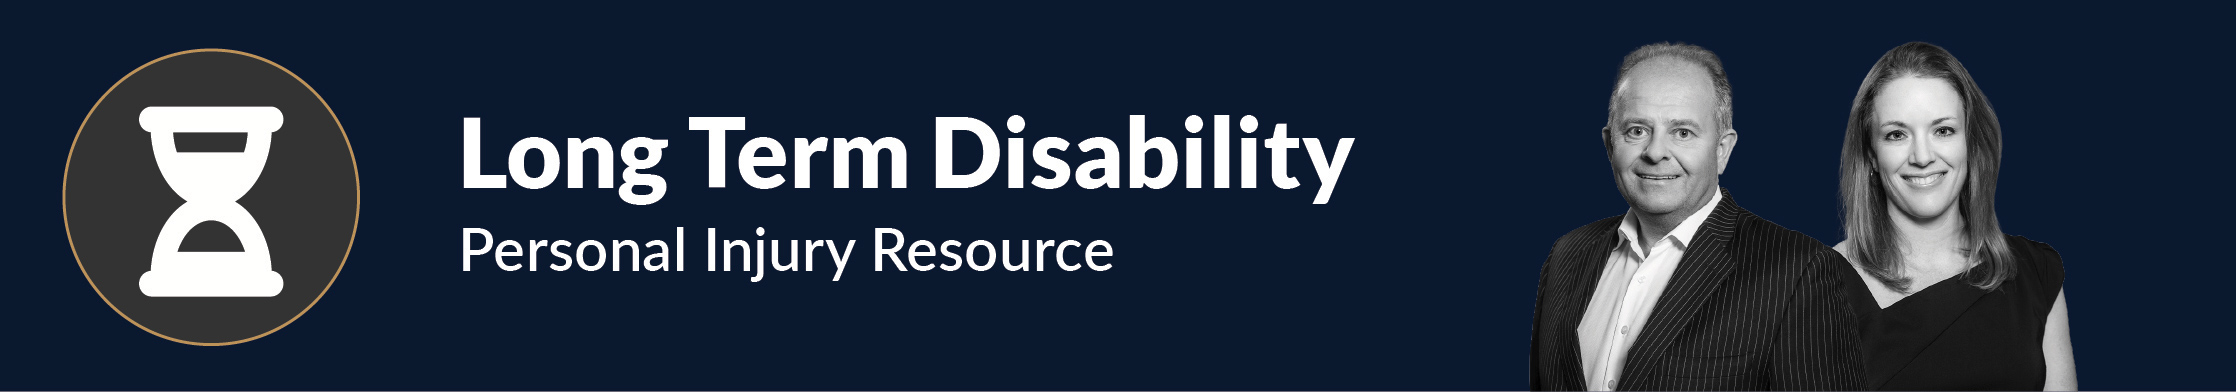 long term disability resource